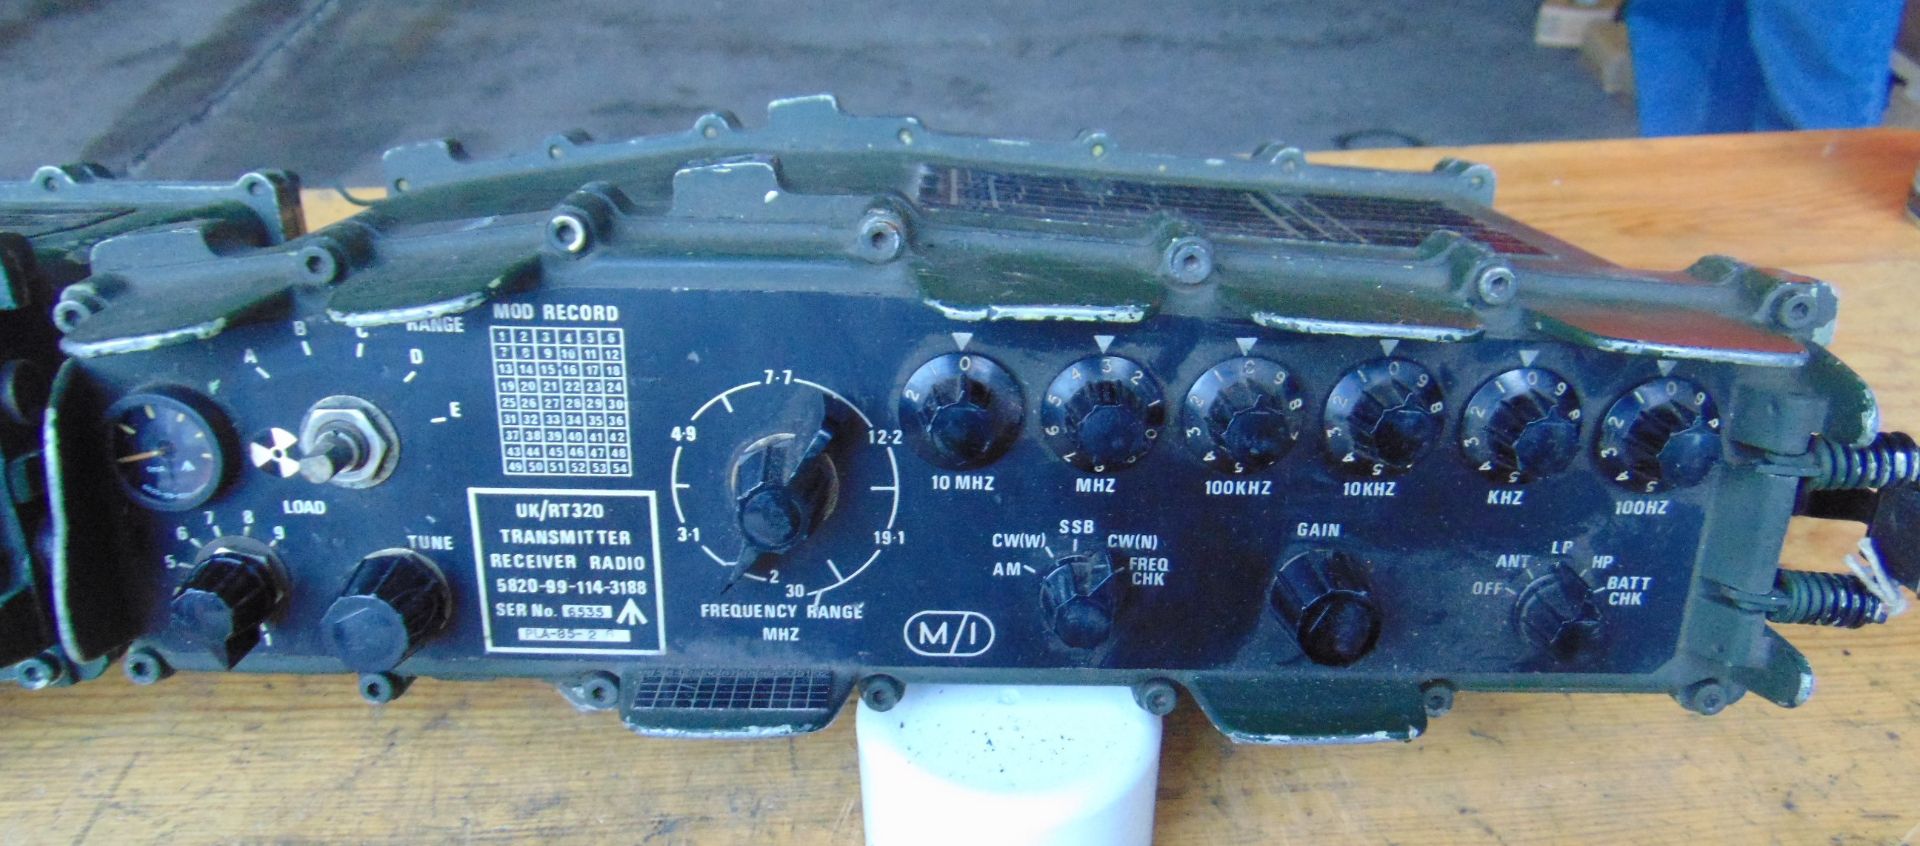 2 x Clansman UKRT 320 HF Transmitter Receivers - Image 6 of 7